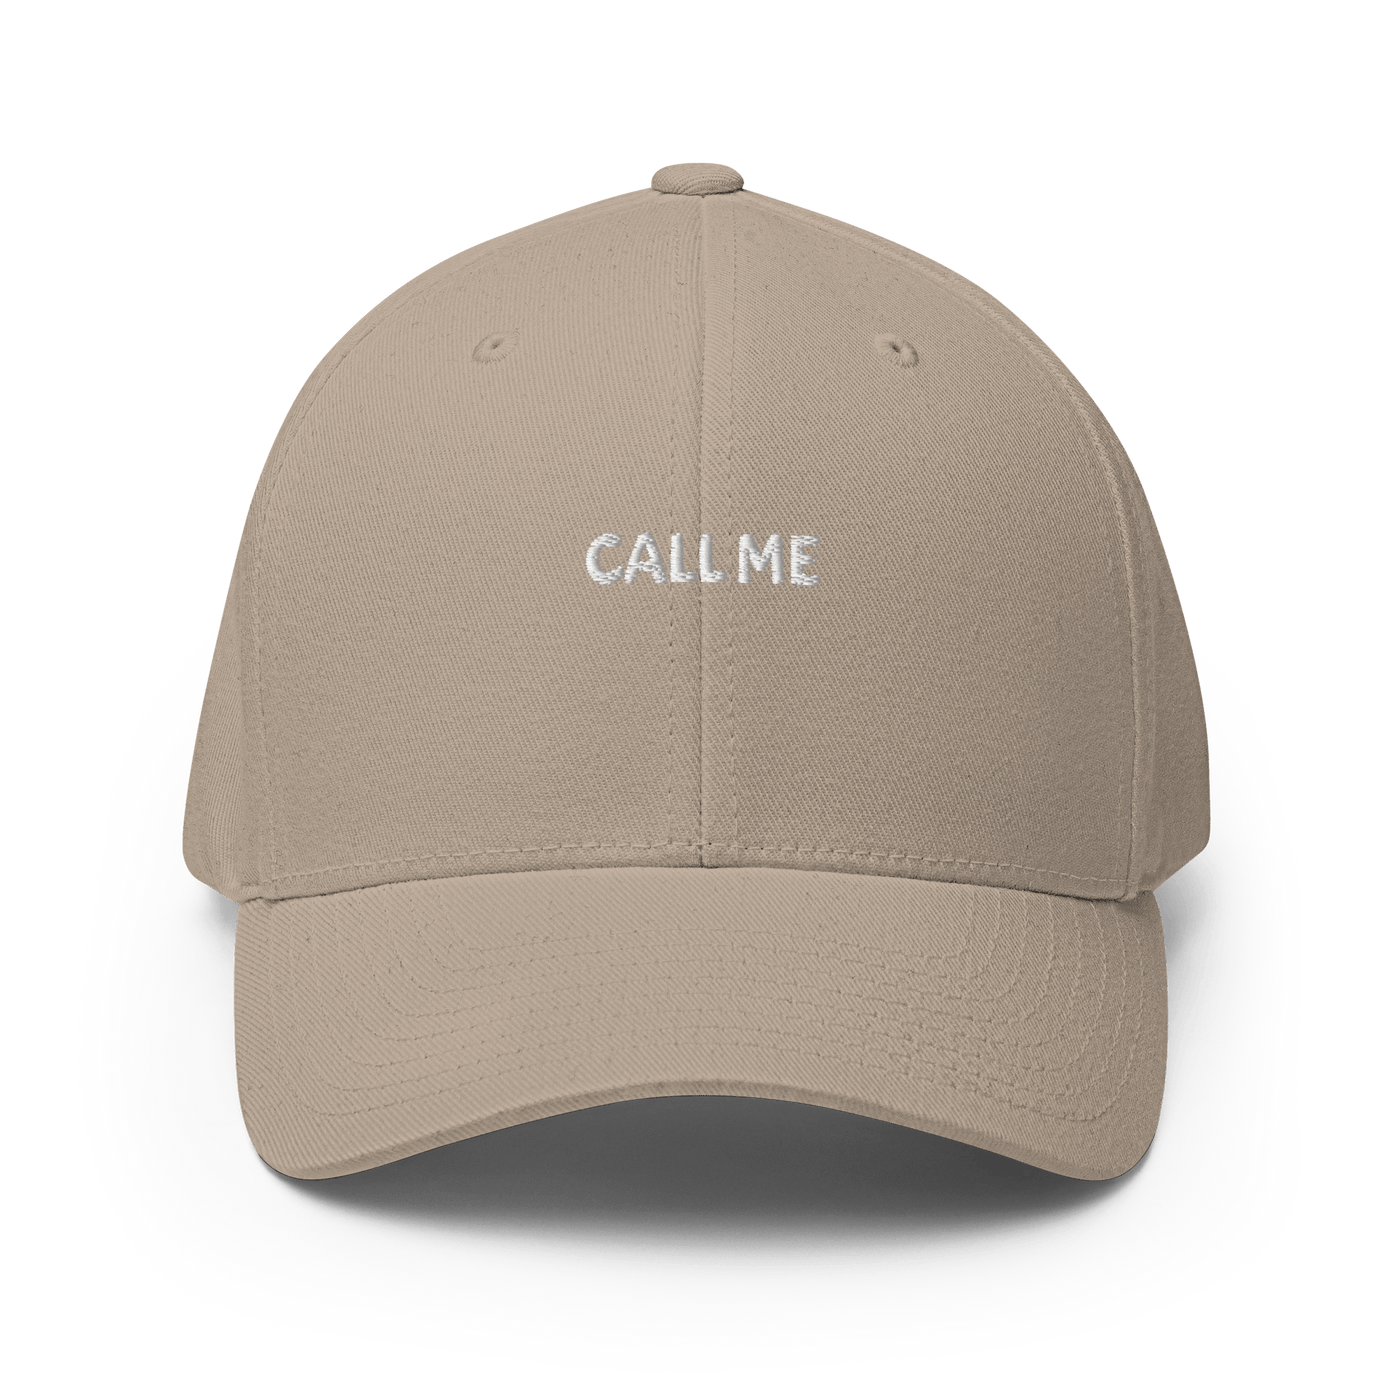 Call Me Flexfit Cap - Olive - S/M - Just Another Cap Store